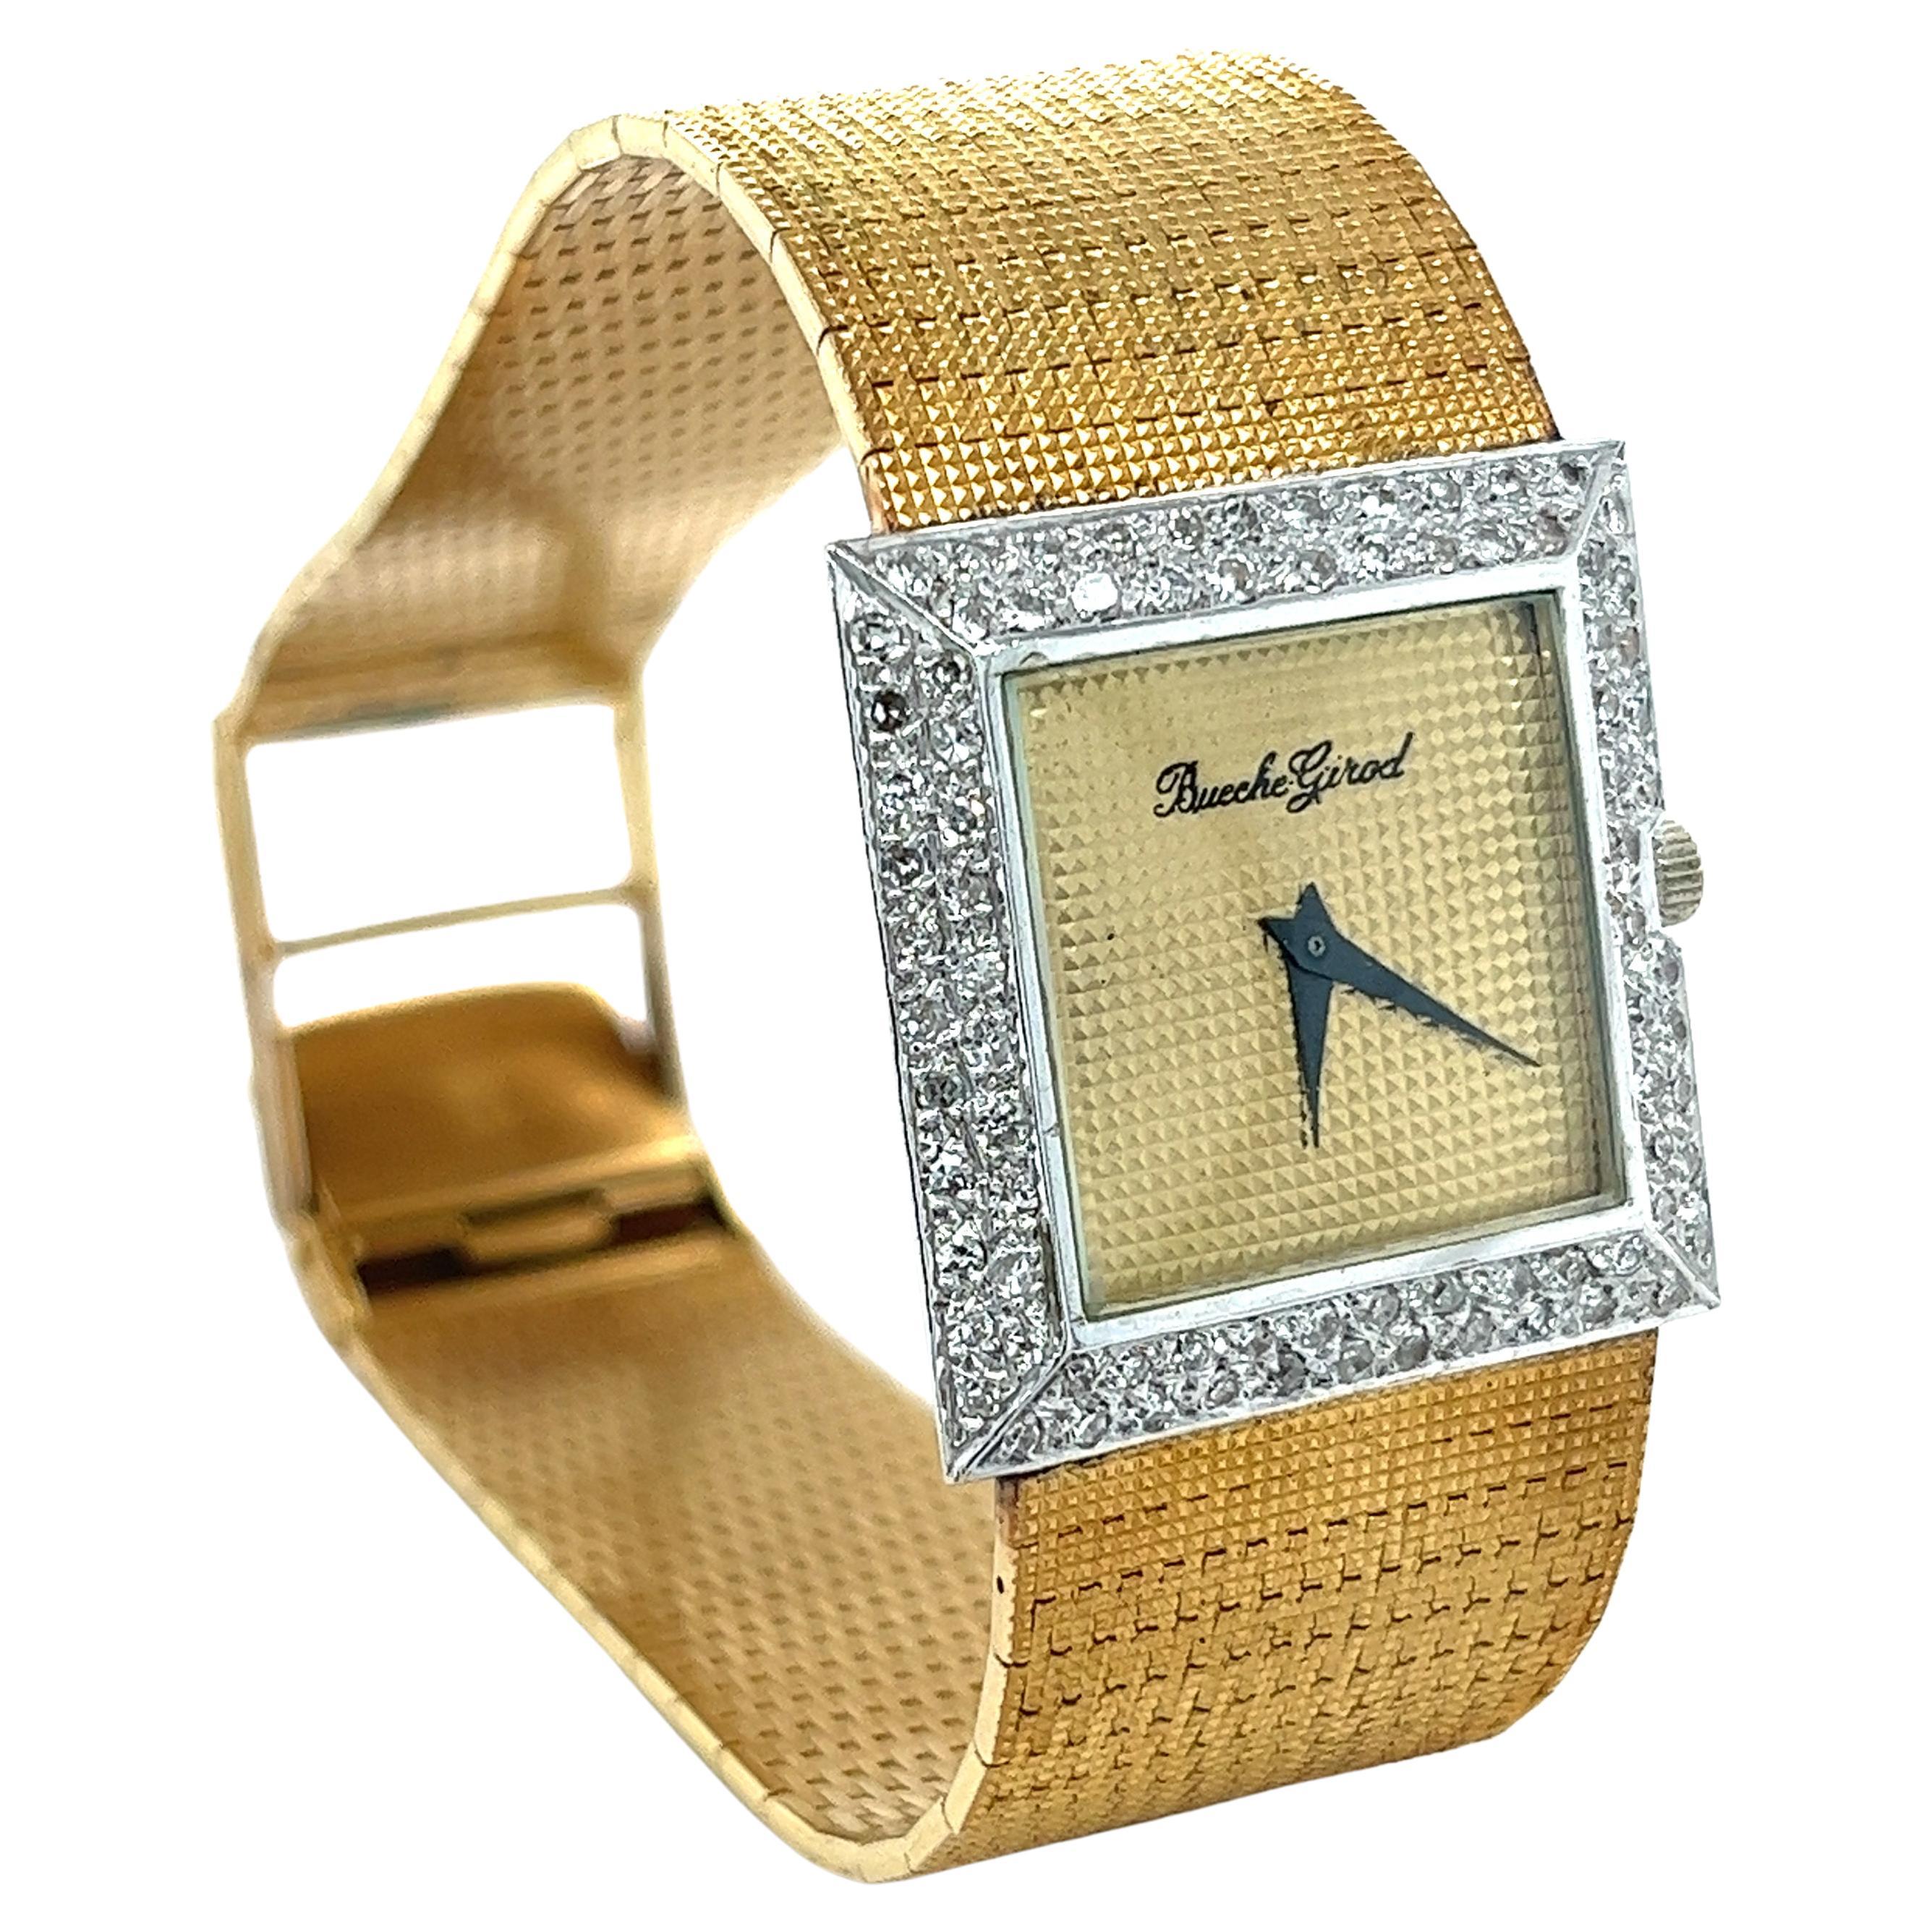 Bueche Girod Square 18k Gold Diamond Bezel & Textured Dauphine Bracelet Watch For Sale